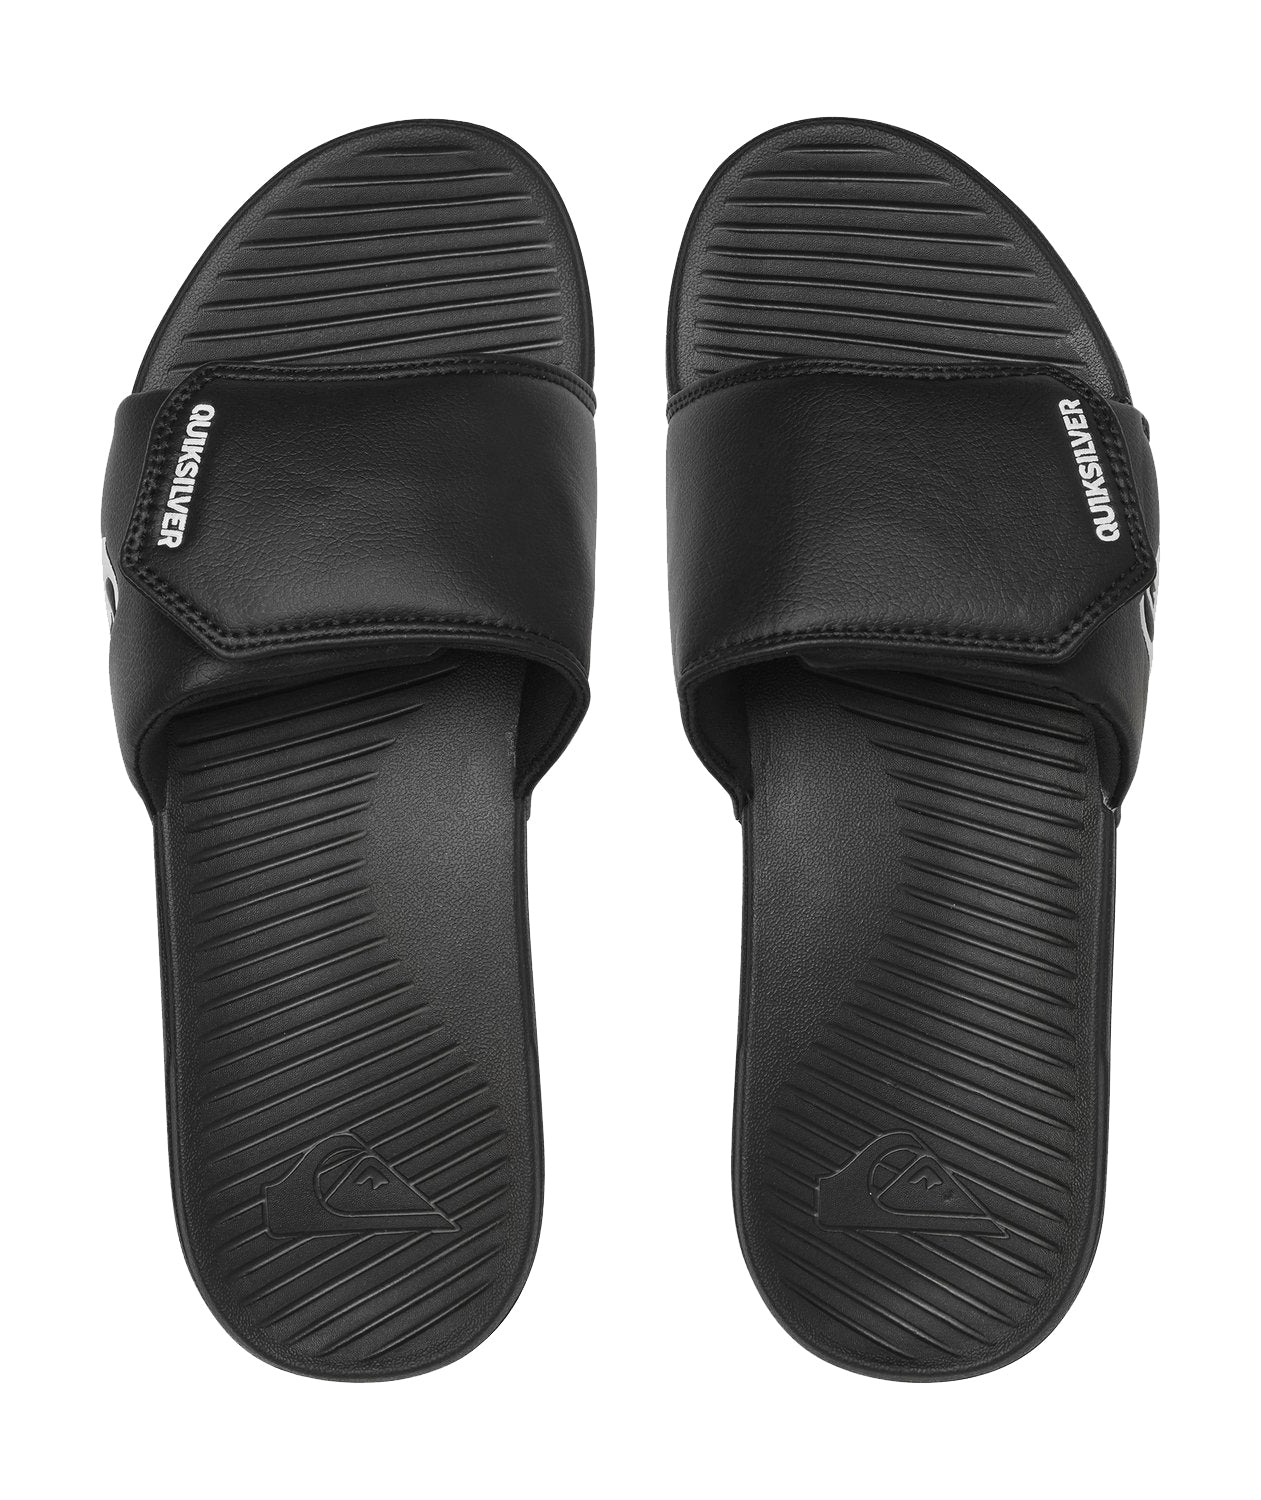 Quiksilver Bright Coast Adjust Mens Sandal XKWK-Black-White-Black 9